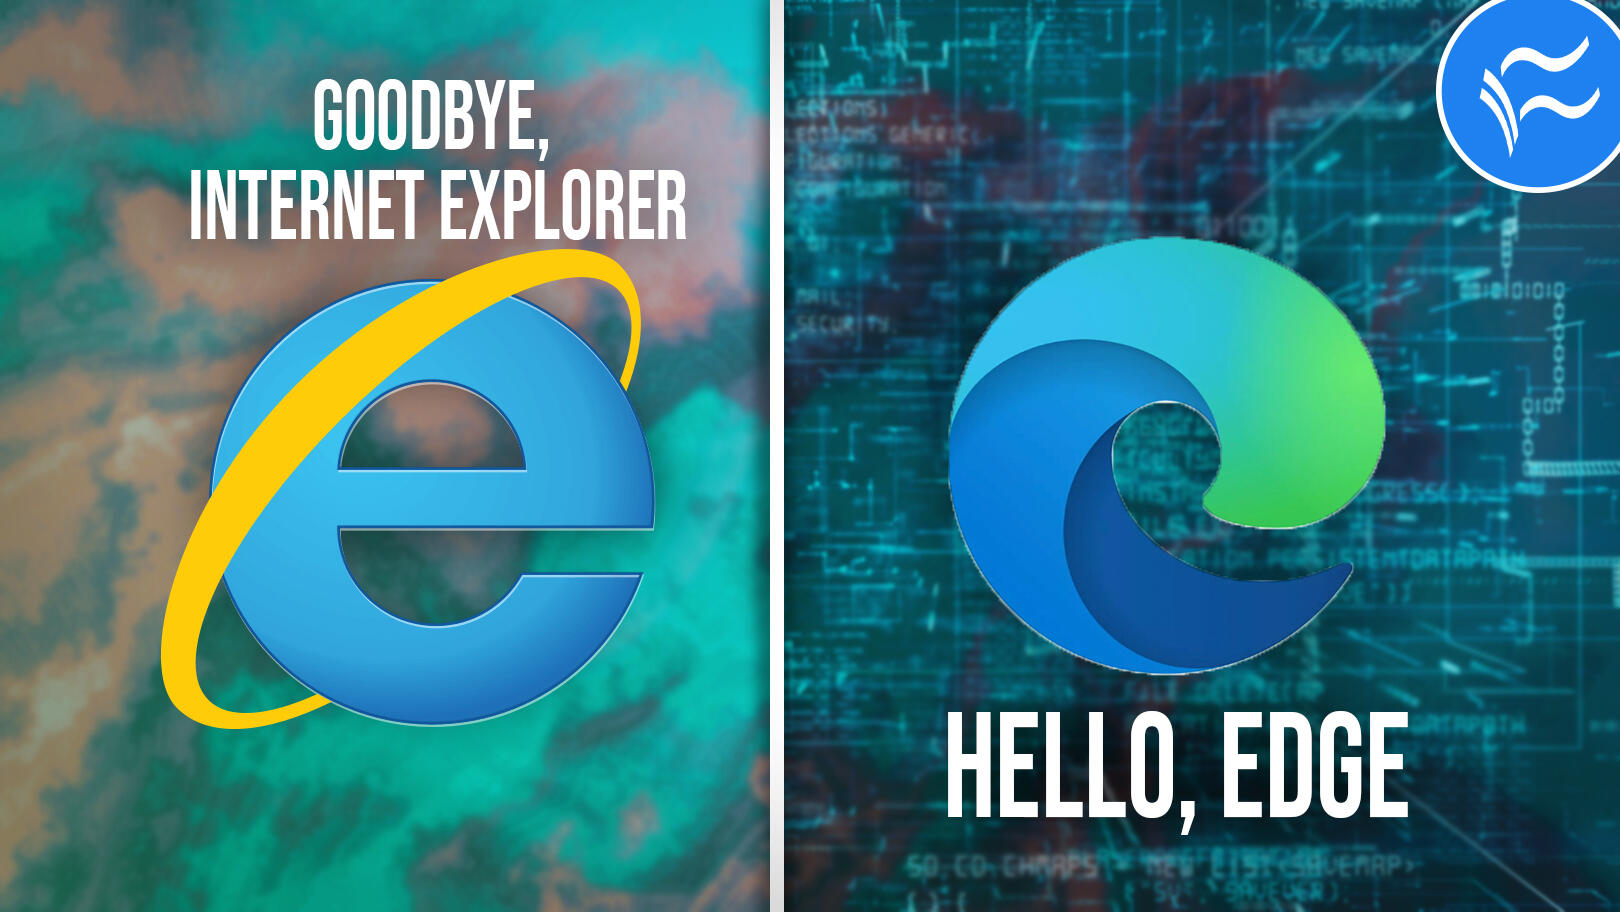 Microsoft announces the official end of Internet Explorer - TechRepublic